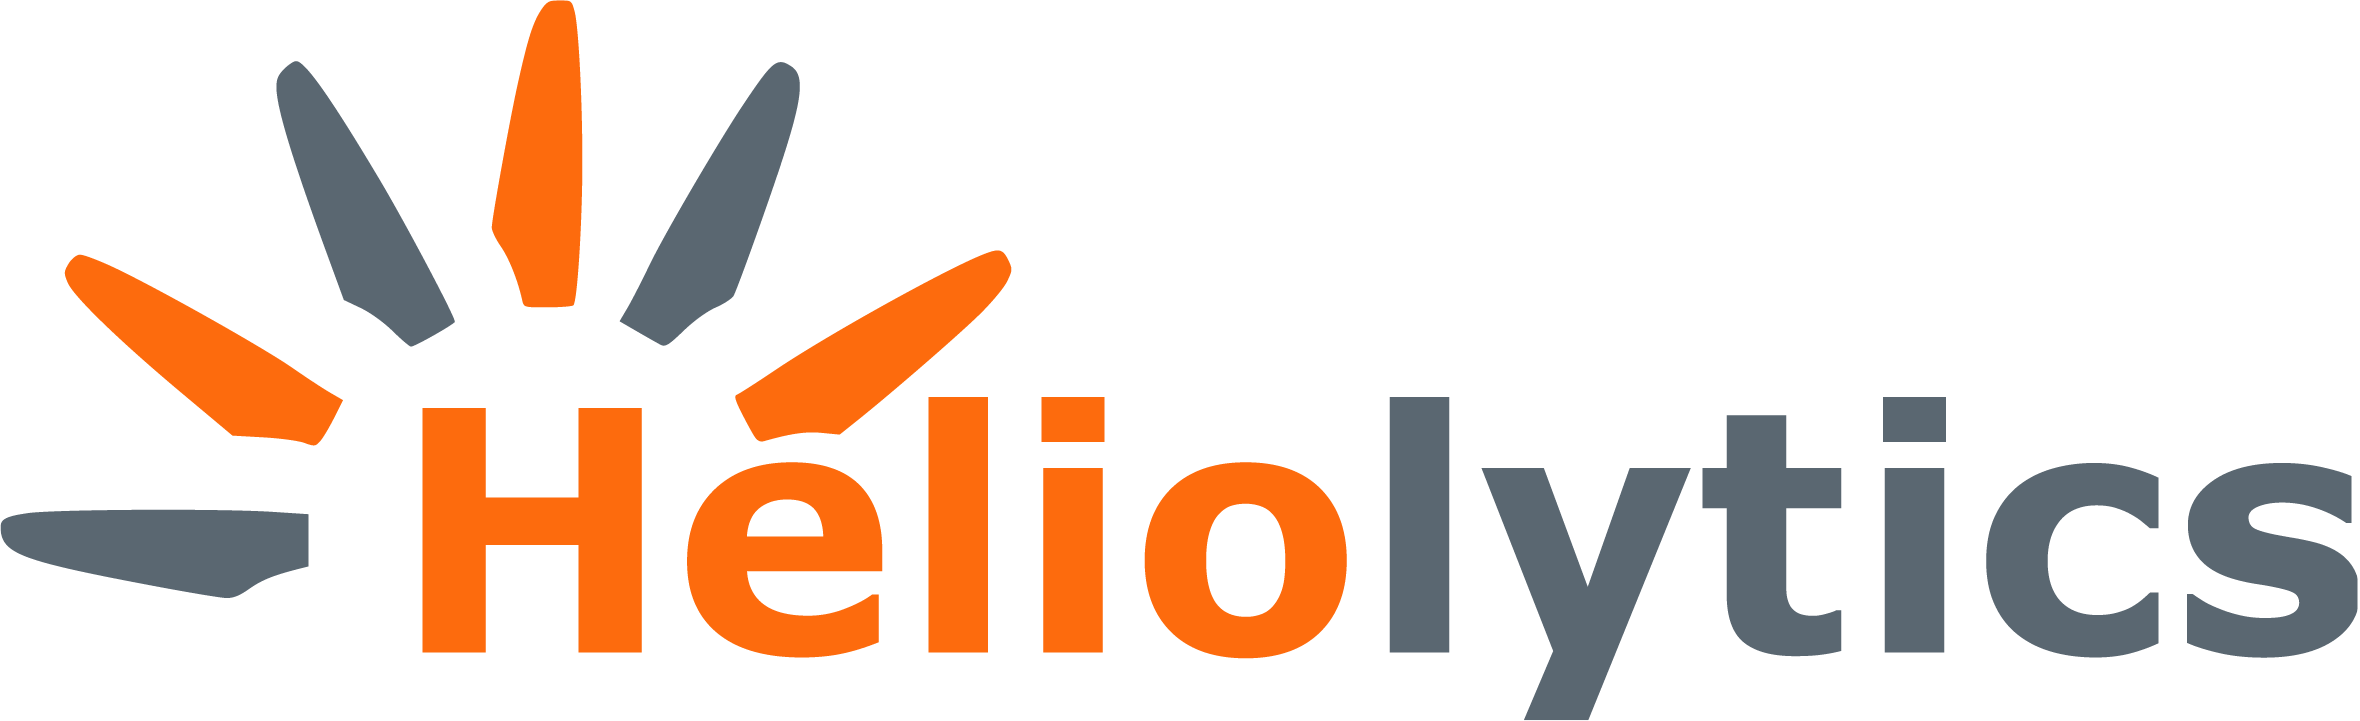 2019-Heliolytics-LOGO-1200x630-1